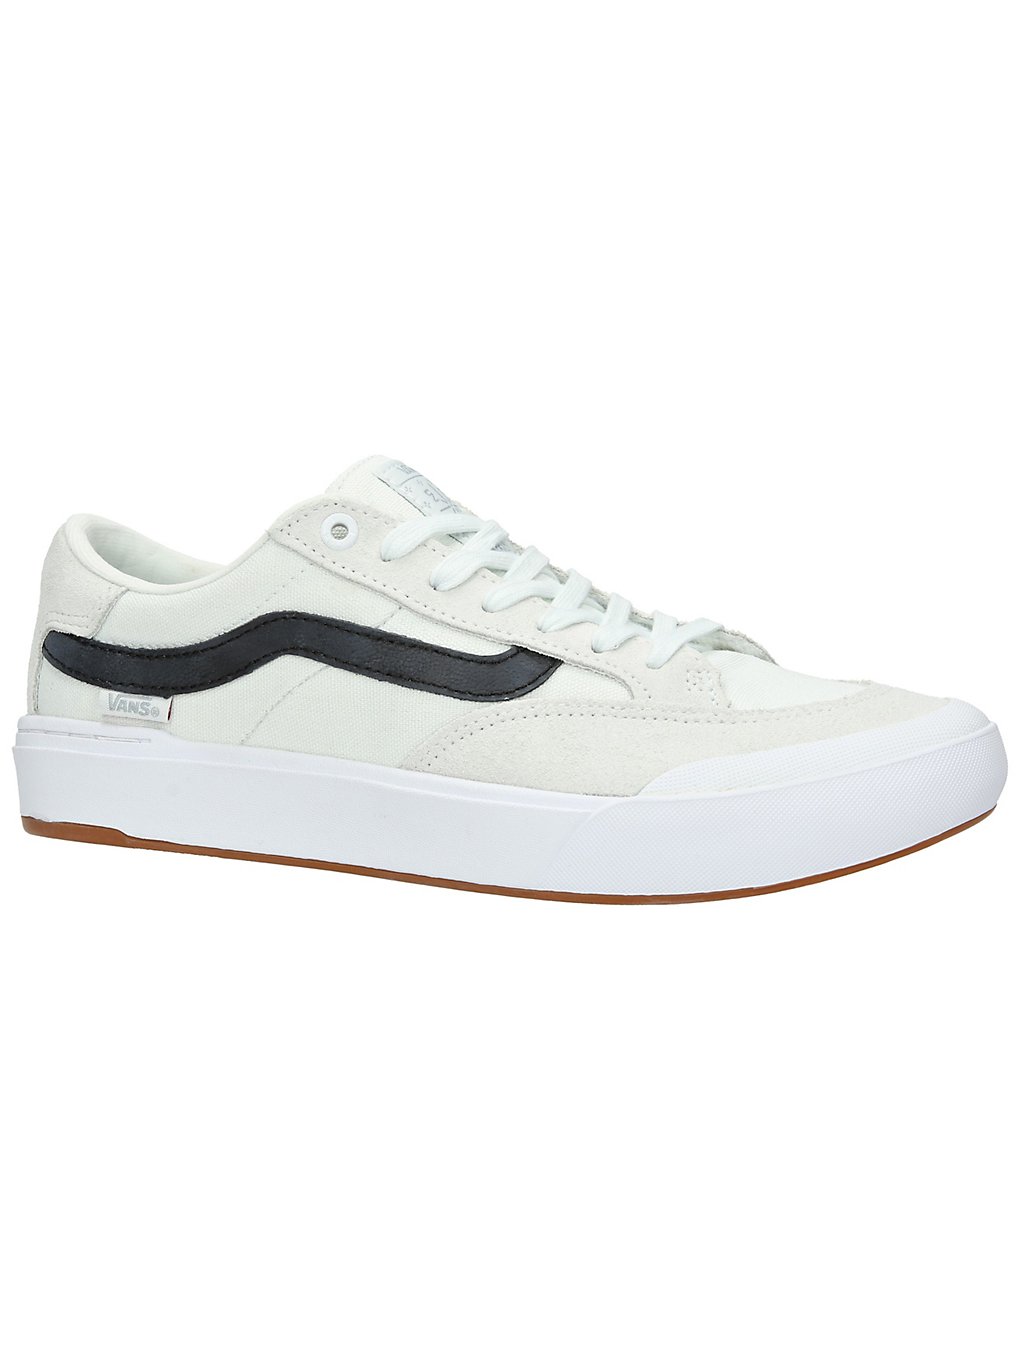 Vans Berle Pro Skate Shoes pearl/white